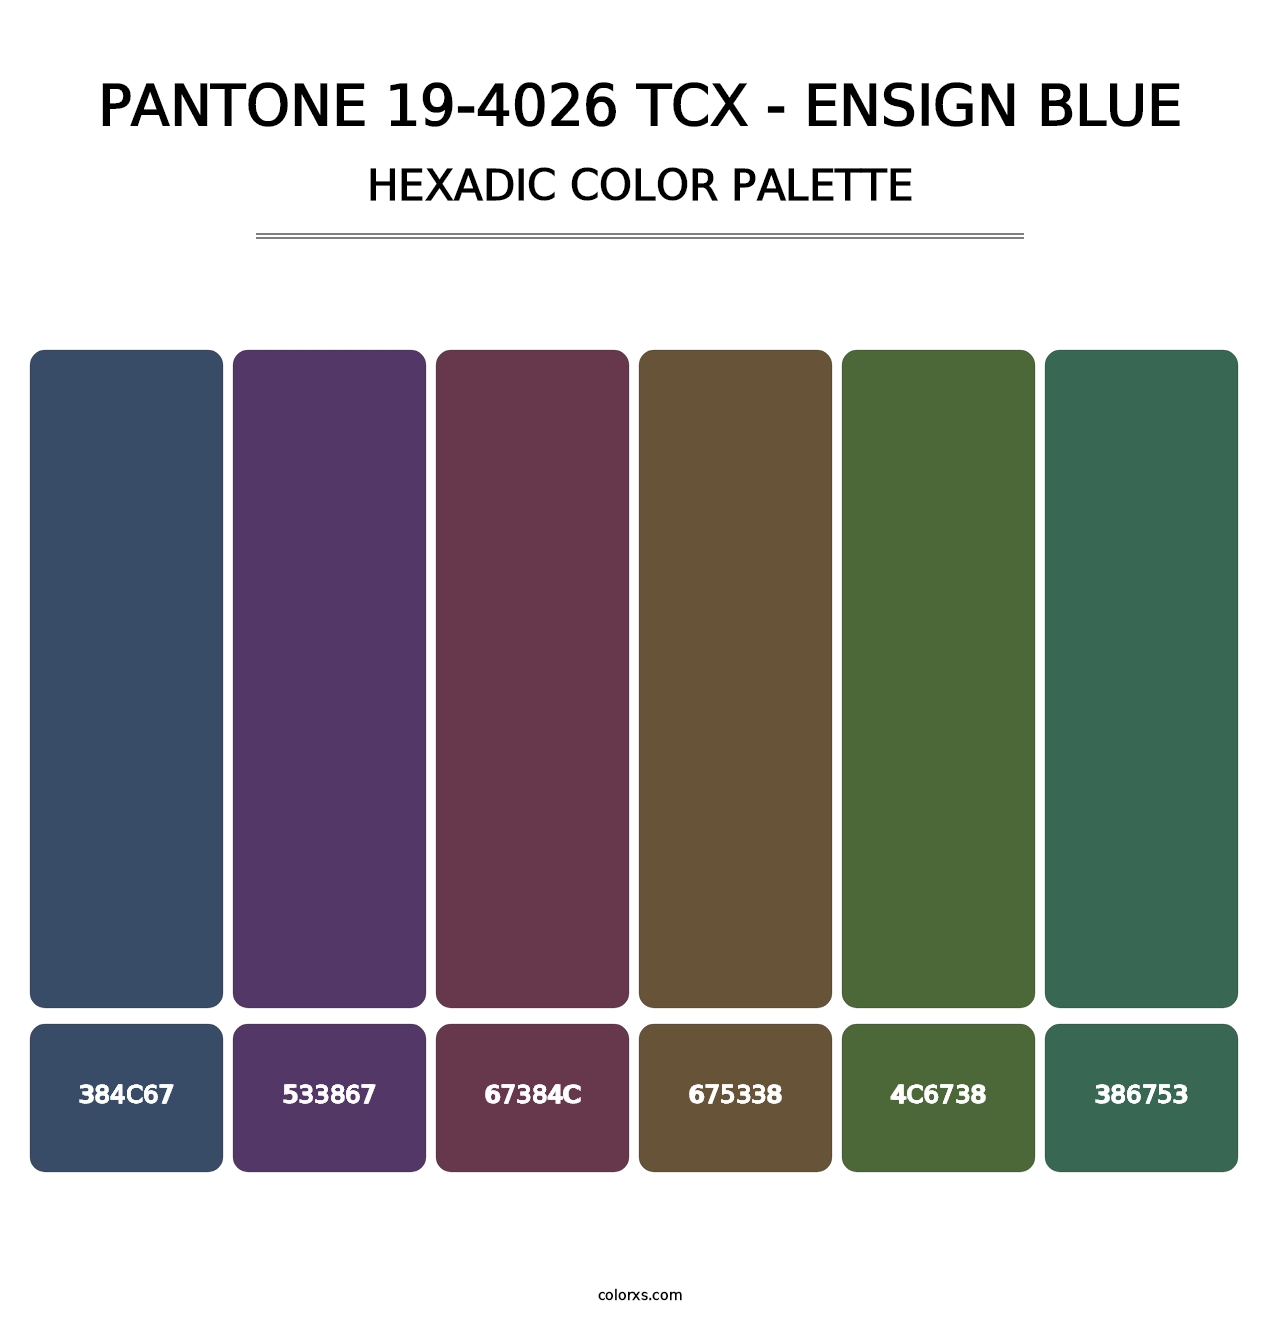 PANTONE 19-4026 TCX - Ensign Blue - Hexadic Color Palette